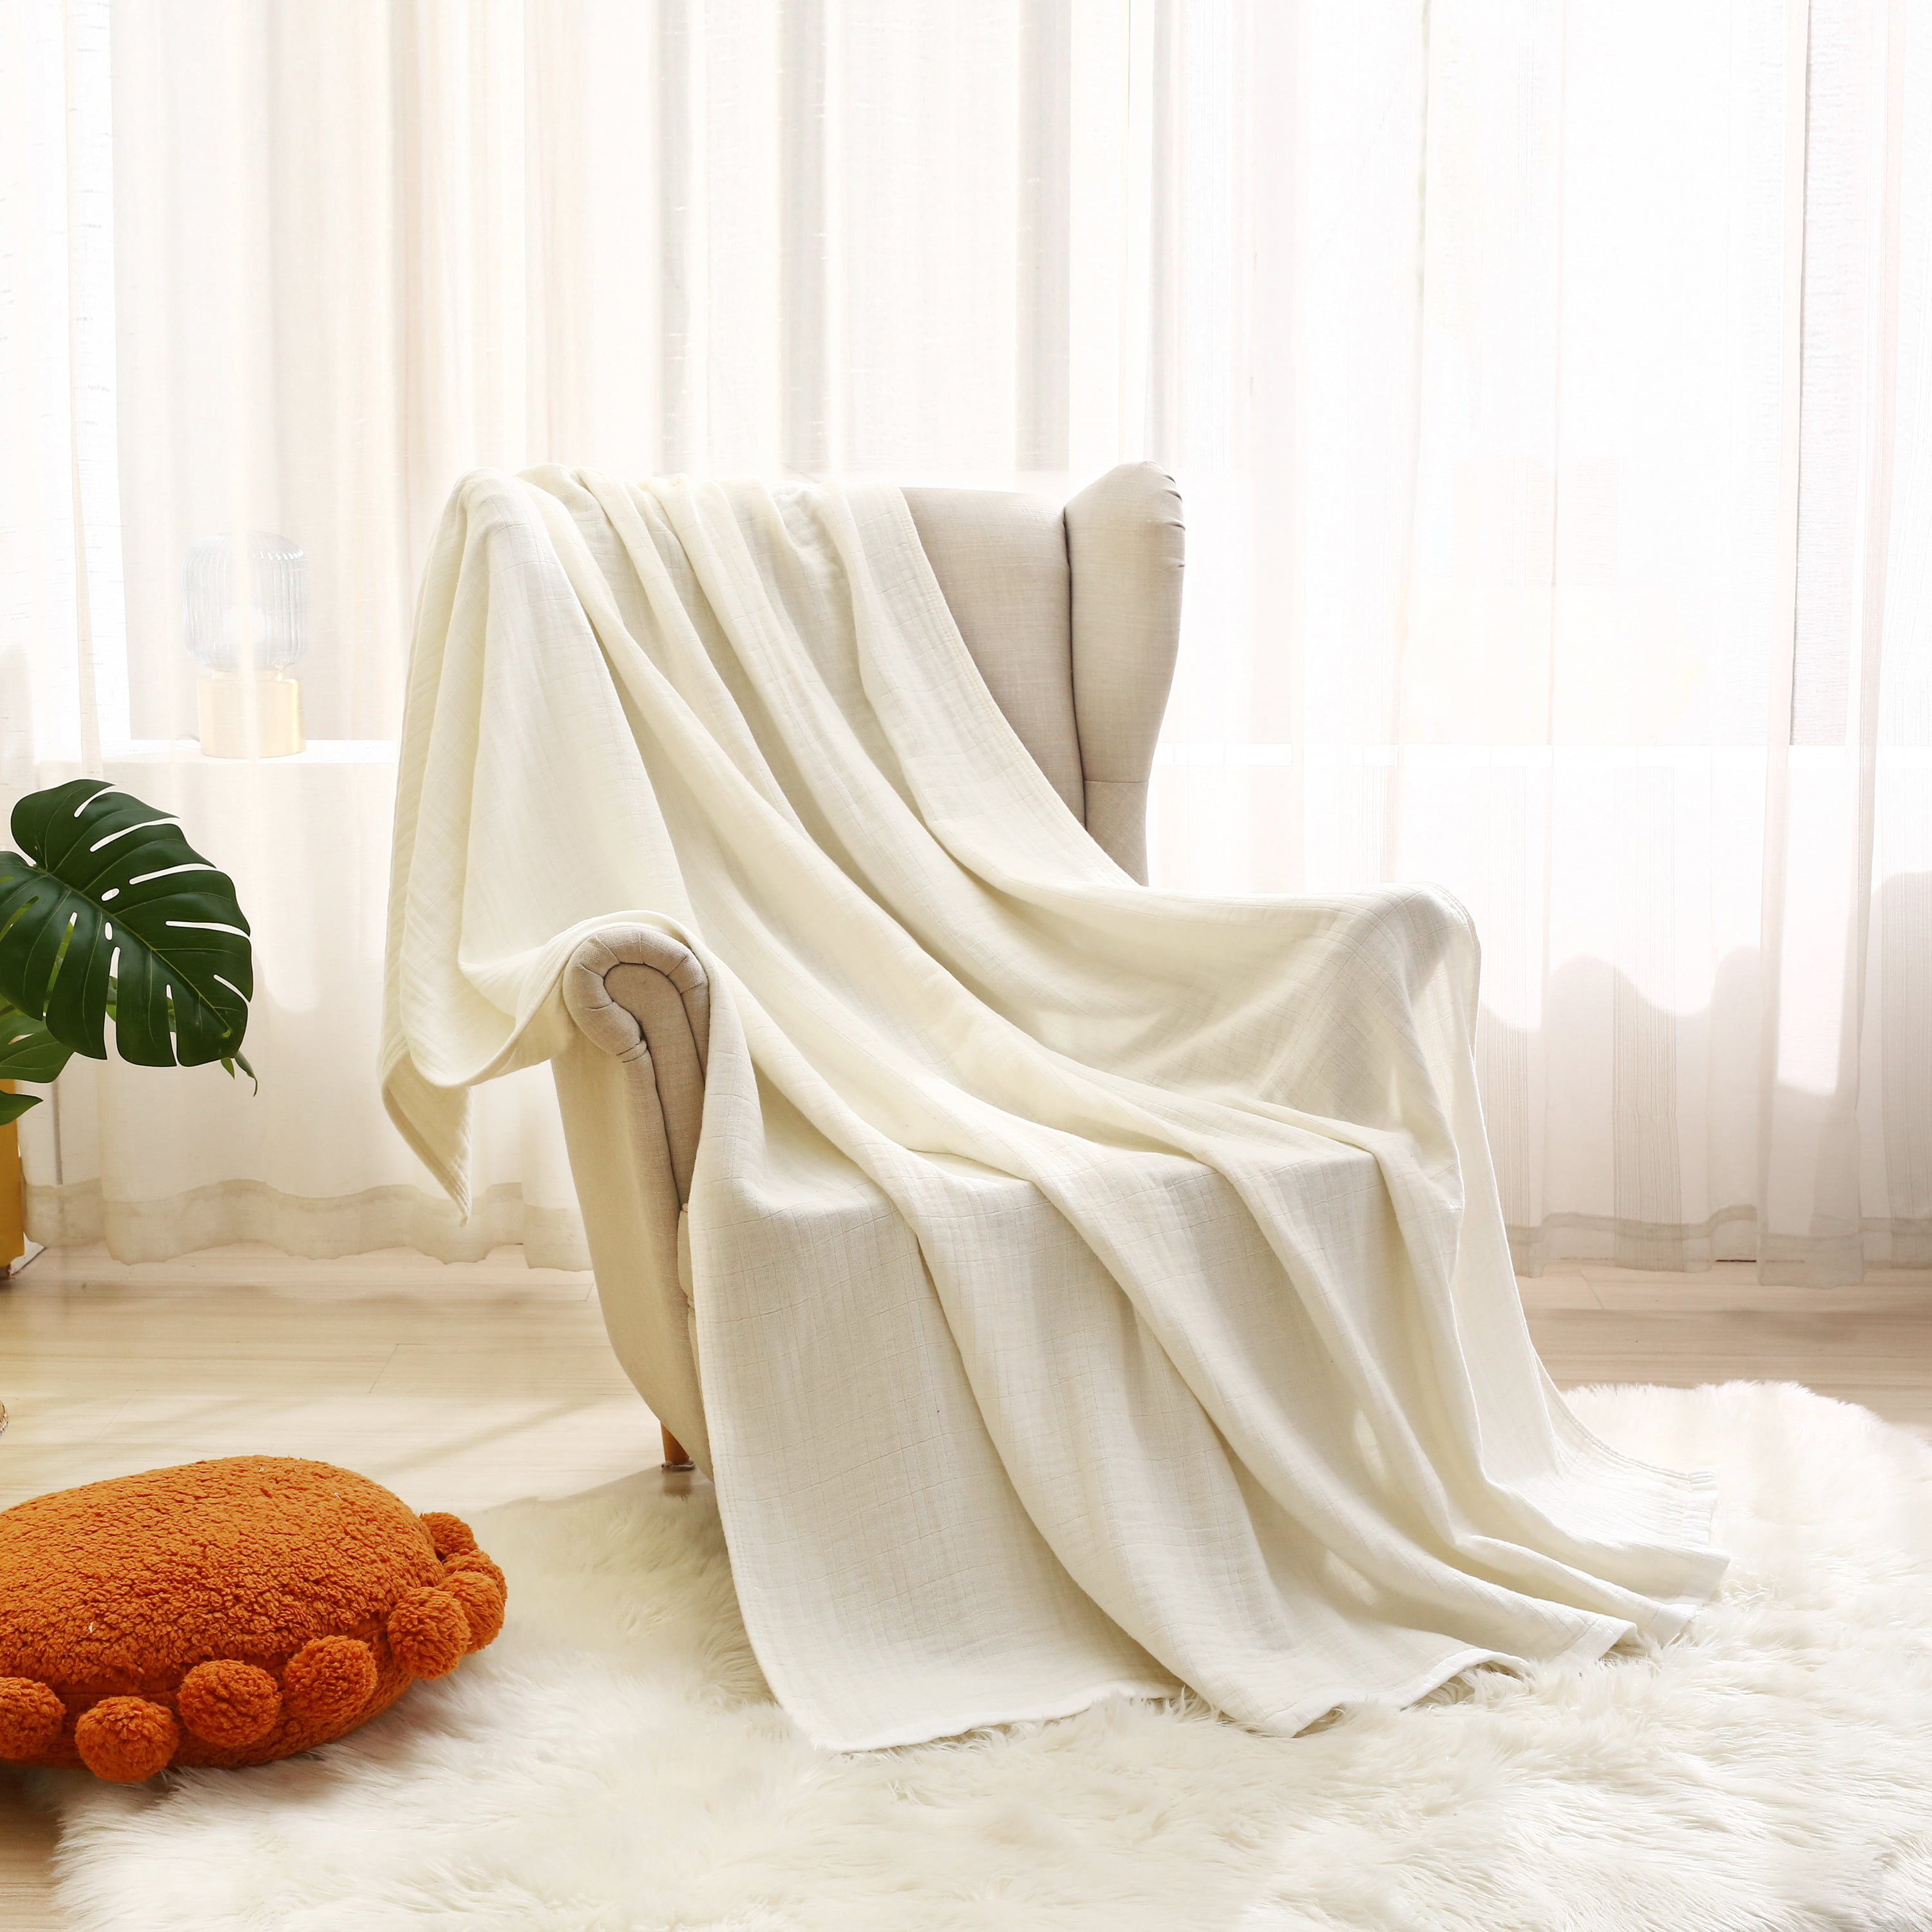 Cozy Woven Cotton Throw Blanket -3 Layers